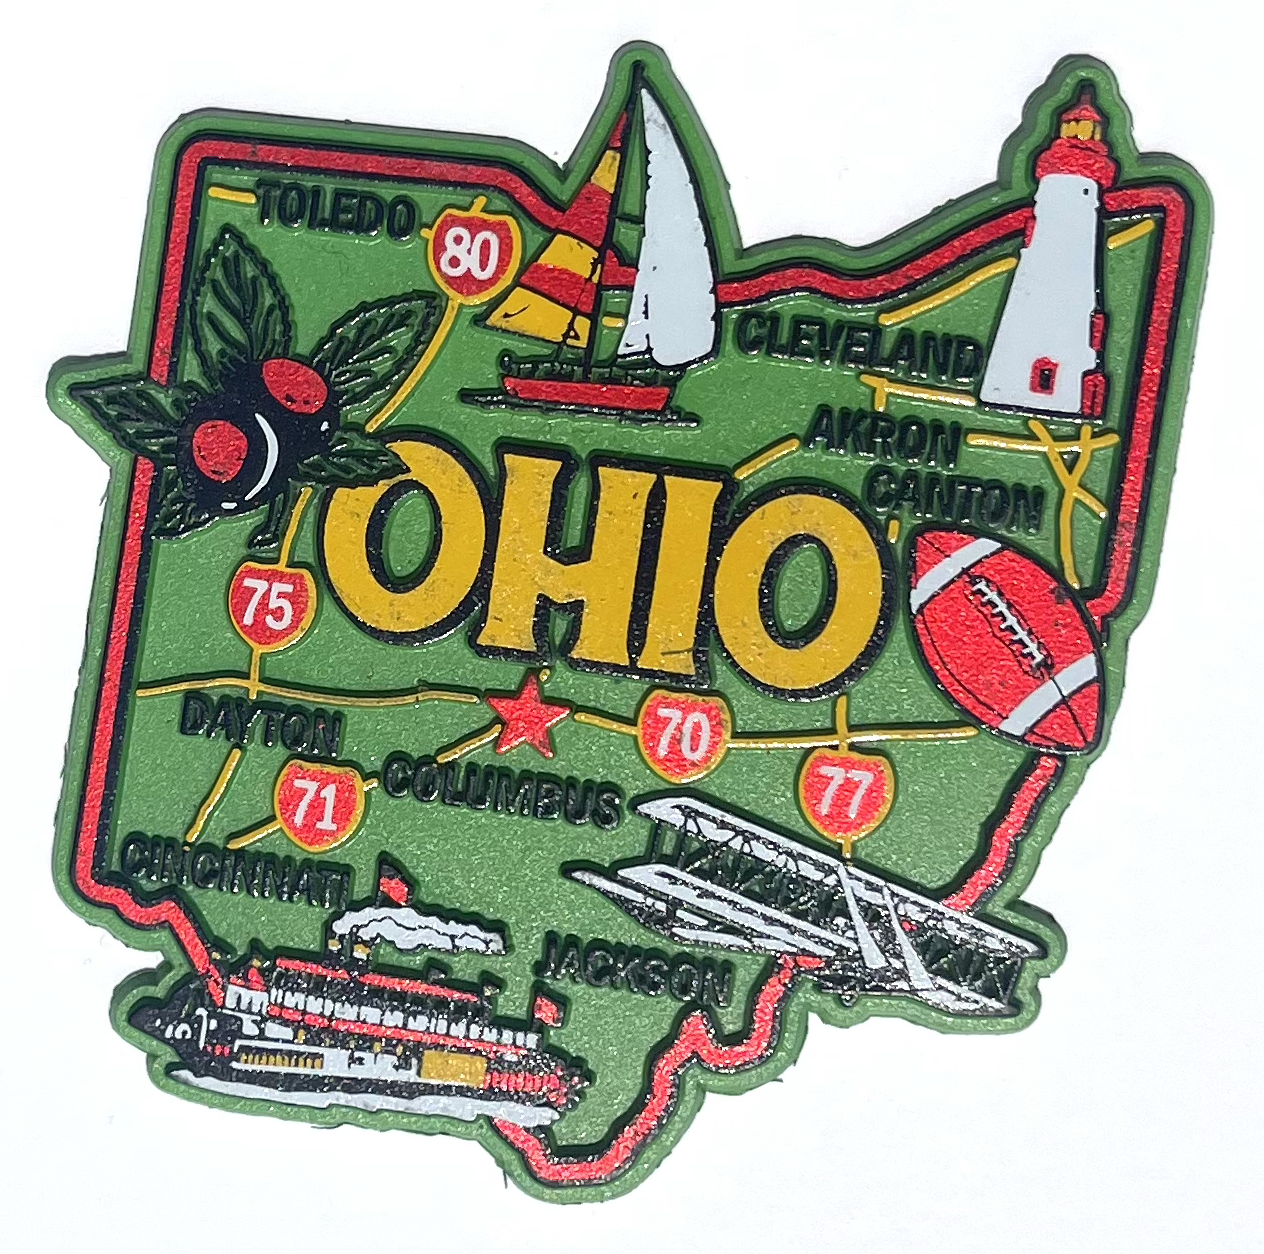 State of Ohio Magnet